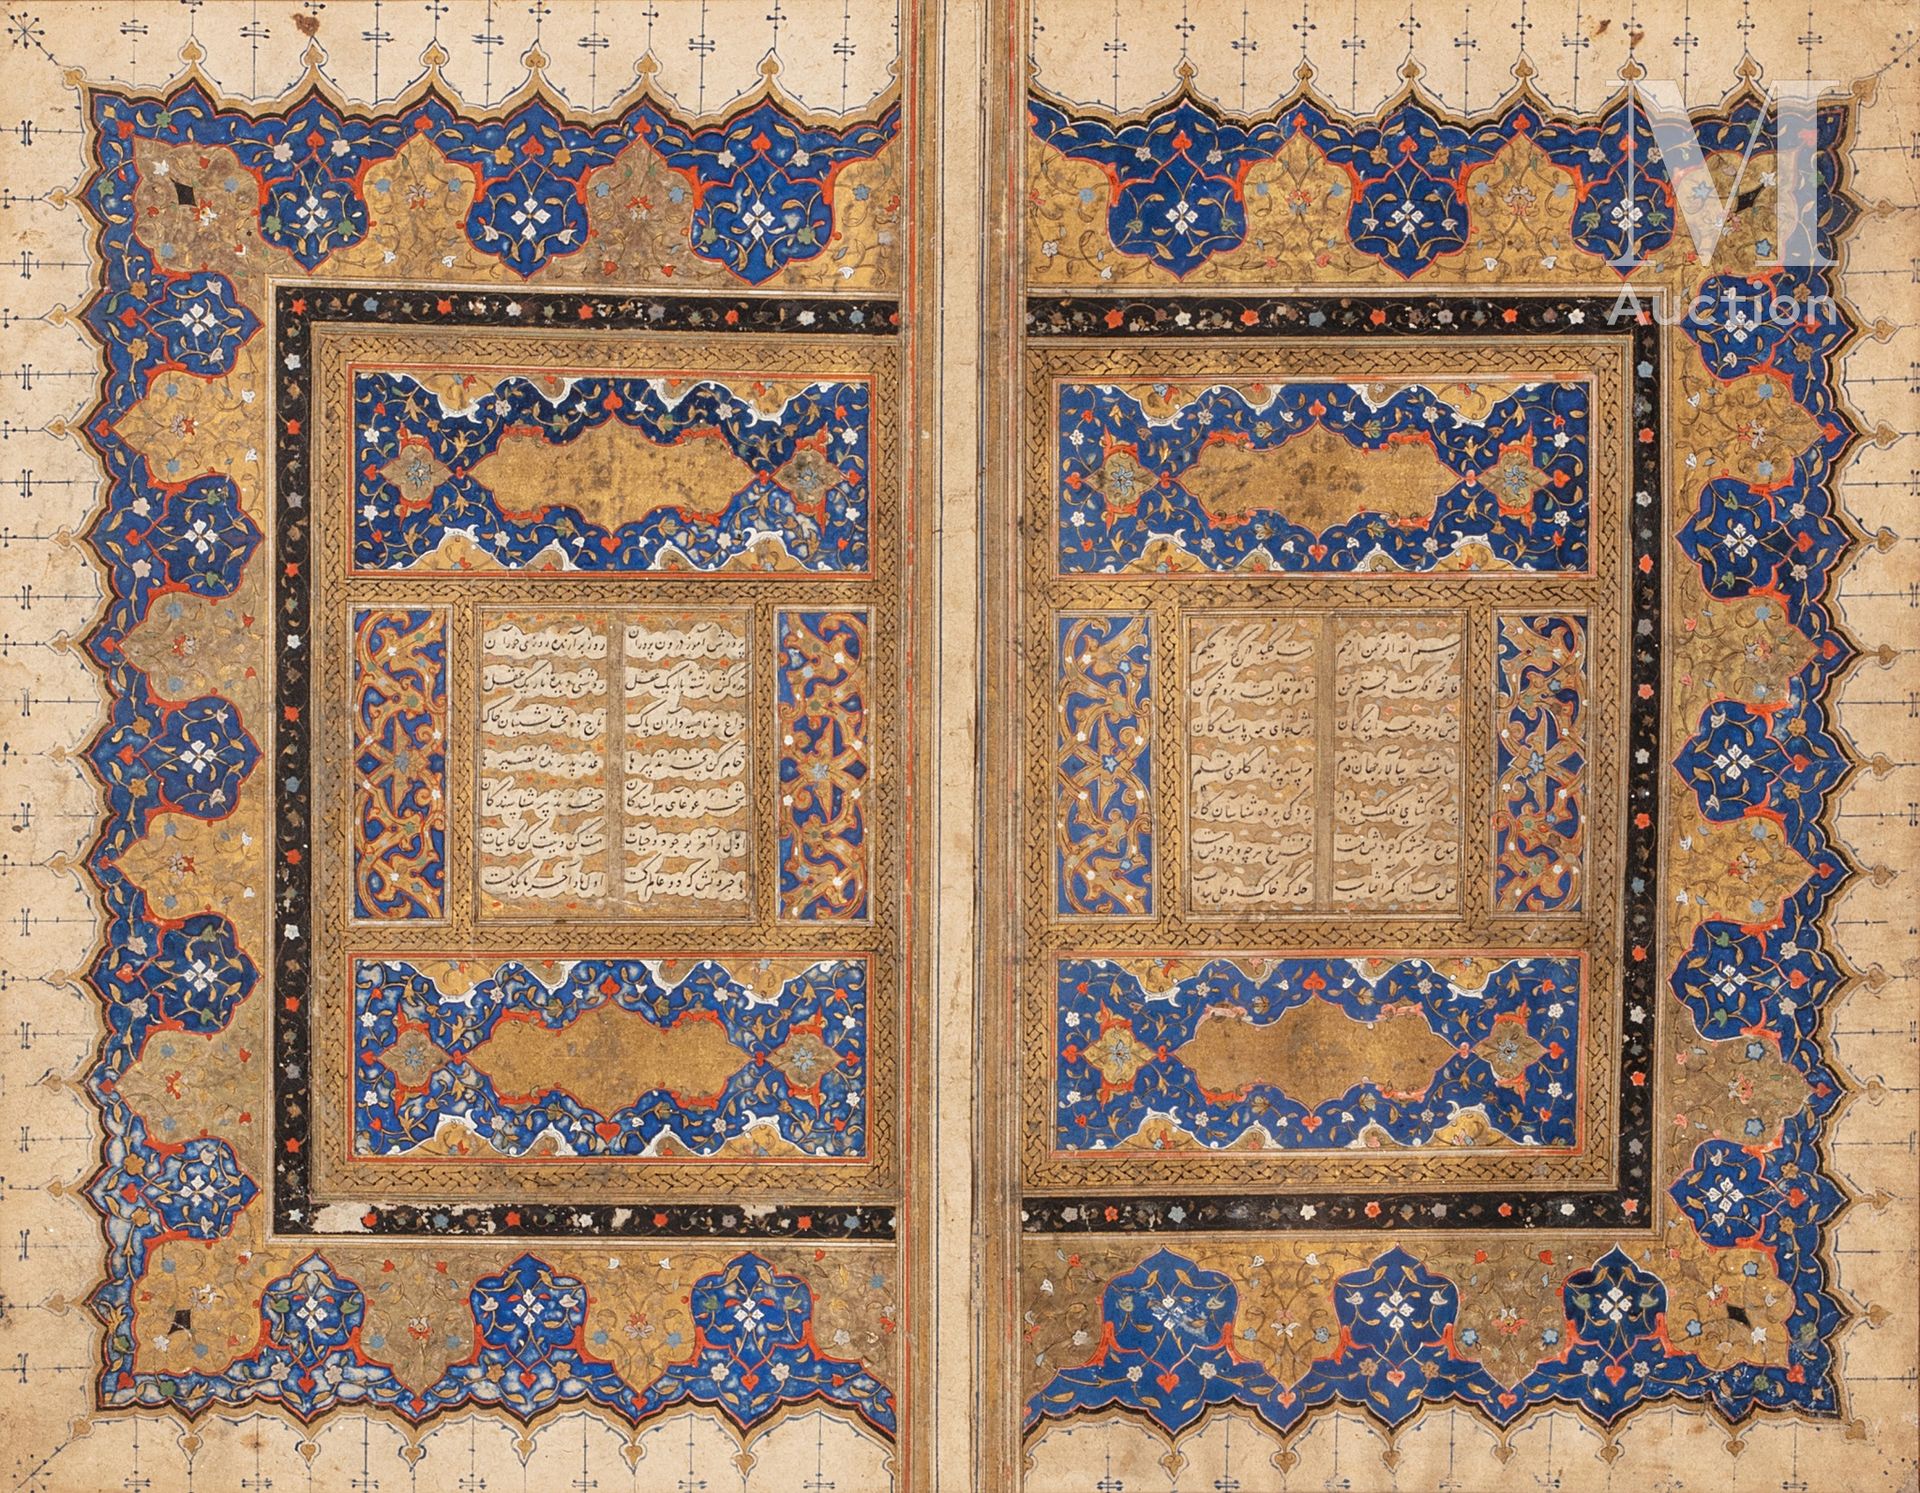 Frontispice de poésie persane Iran, 16th century

Double leaf of an illuminated &hellip;